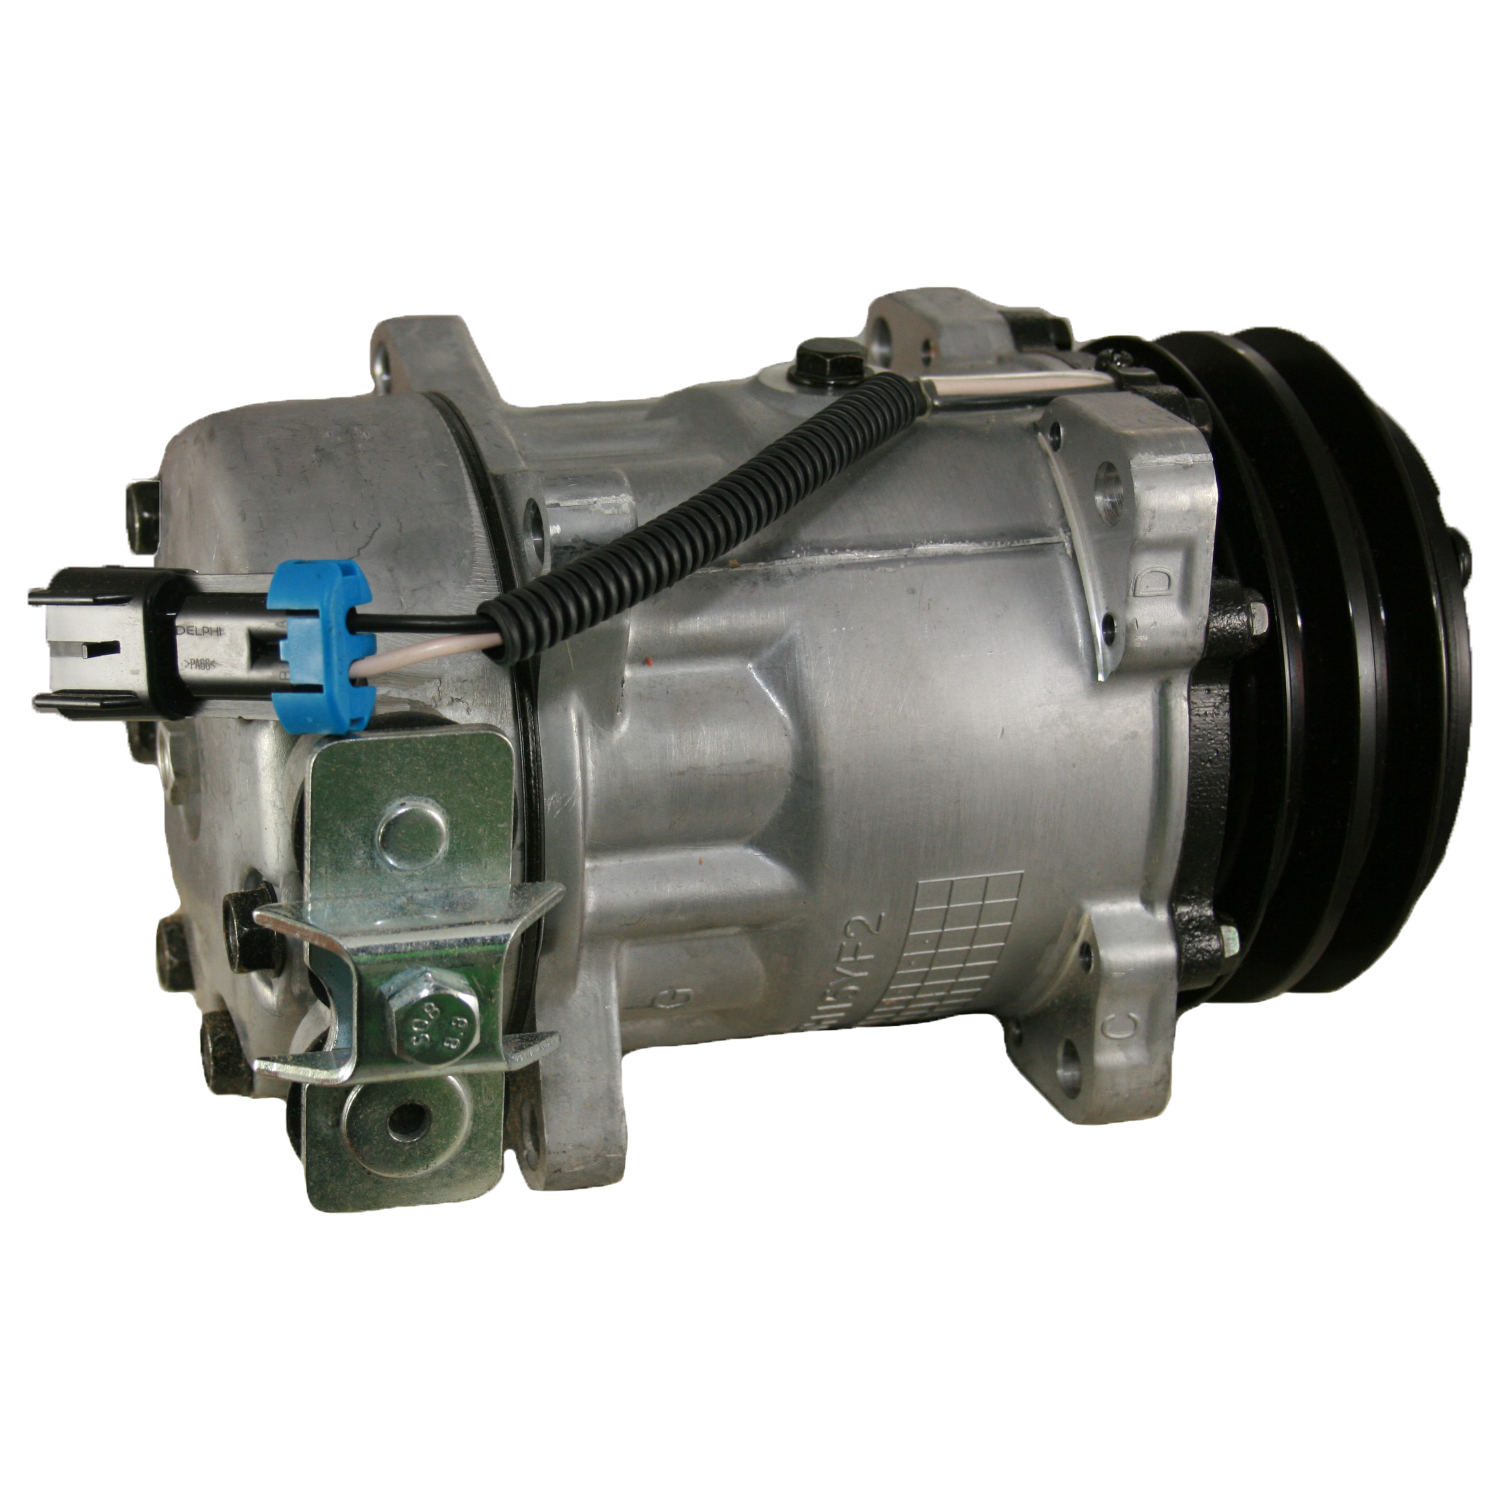 TCW Compressor 40583.201NEW New Product Image field_60b6a13a6e67c